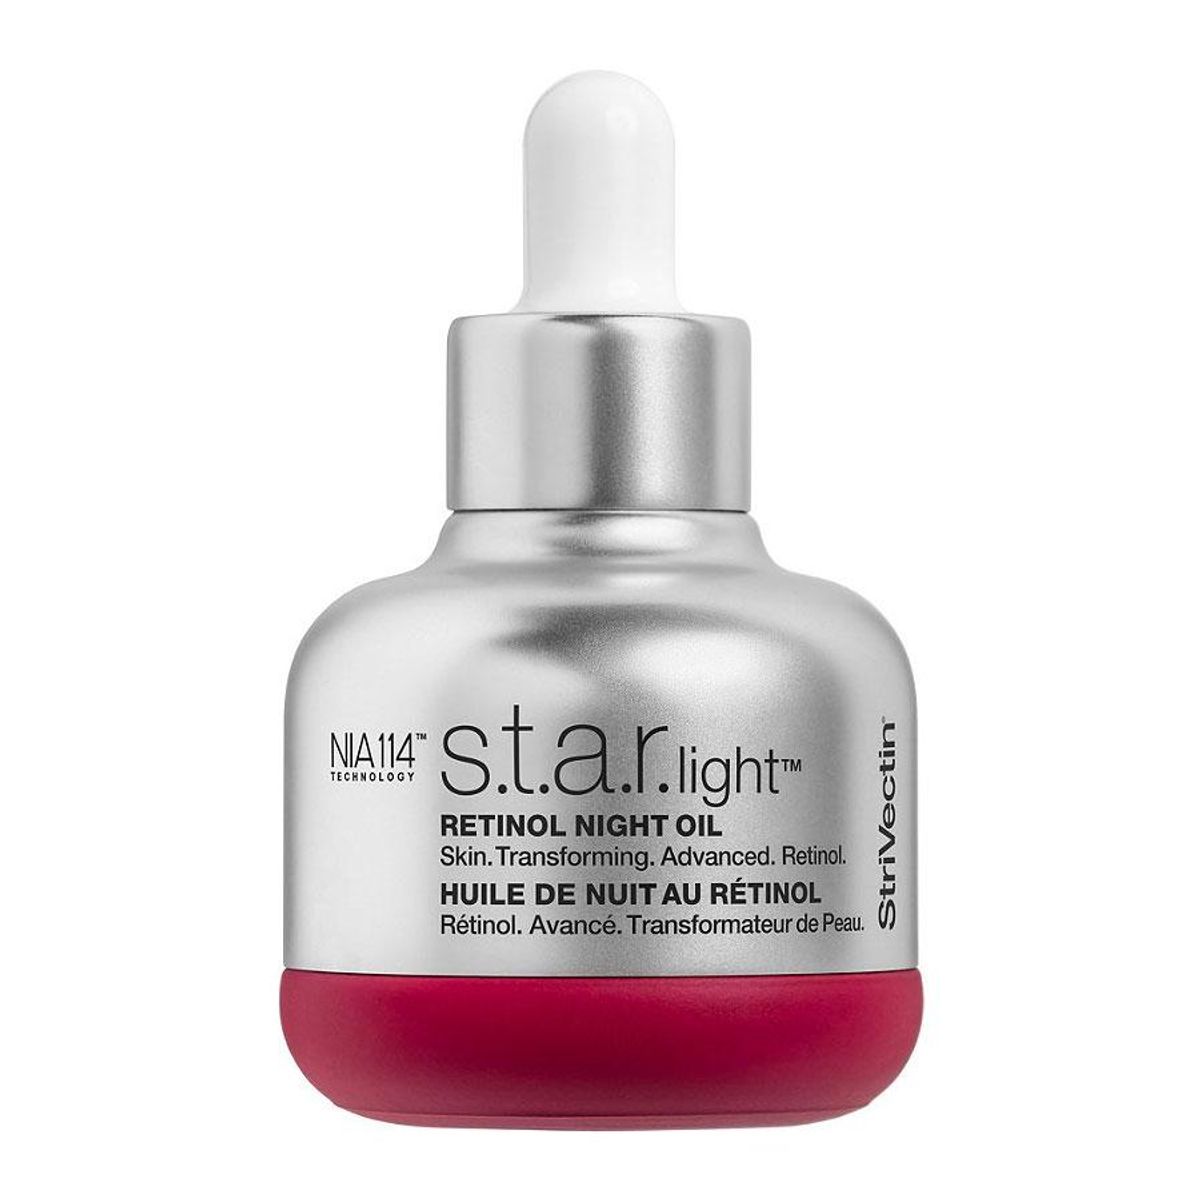 strivectin star light retinol night oil